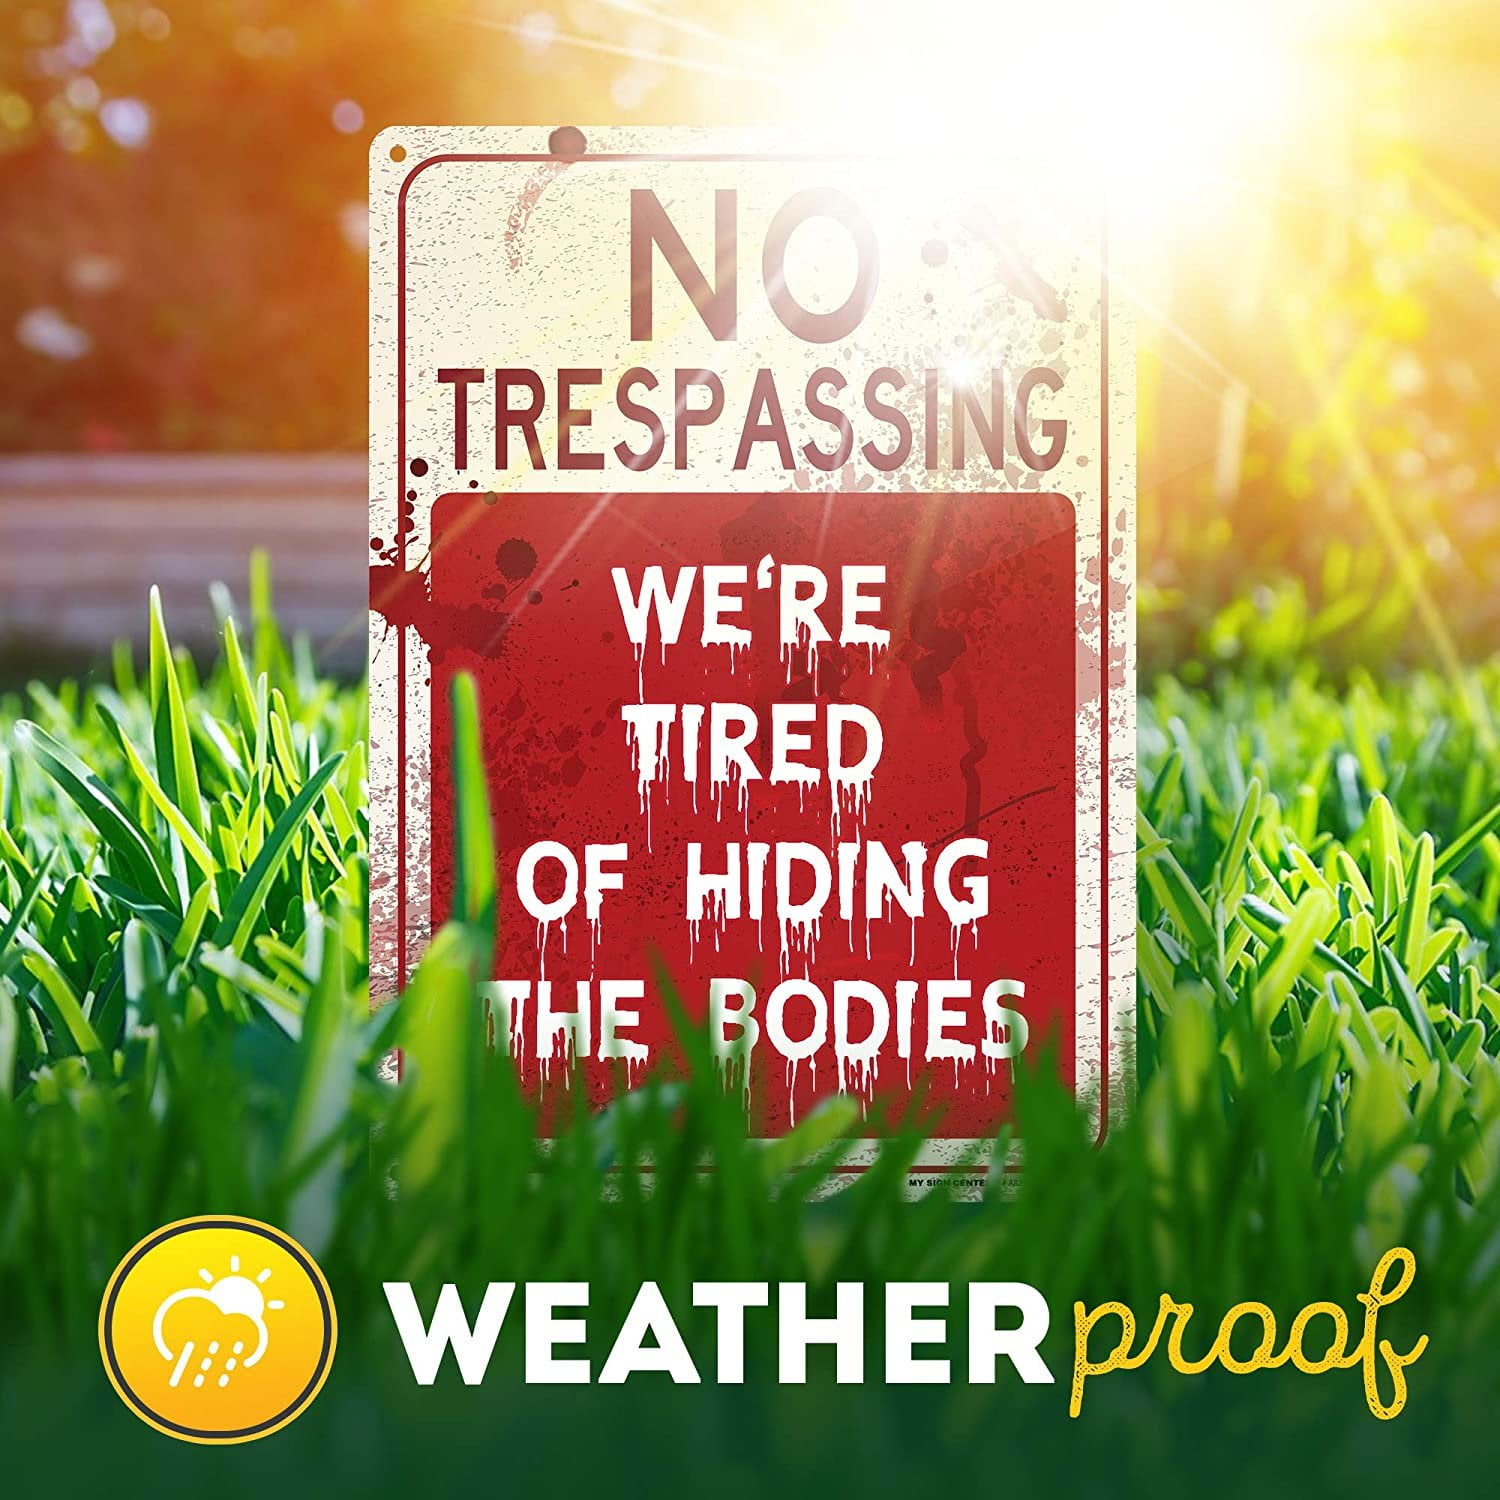 METAL FRIDGE MAGNET No Trespassing We're Tired Hiding Bodies Family Friend Humor 